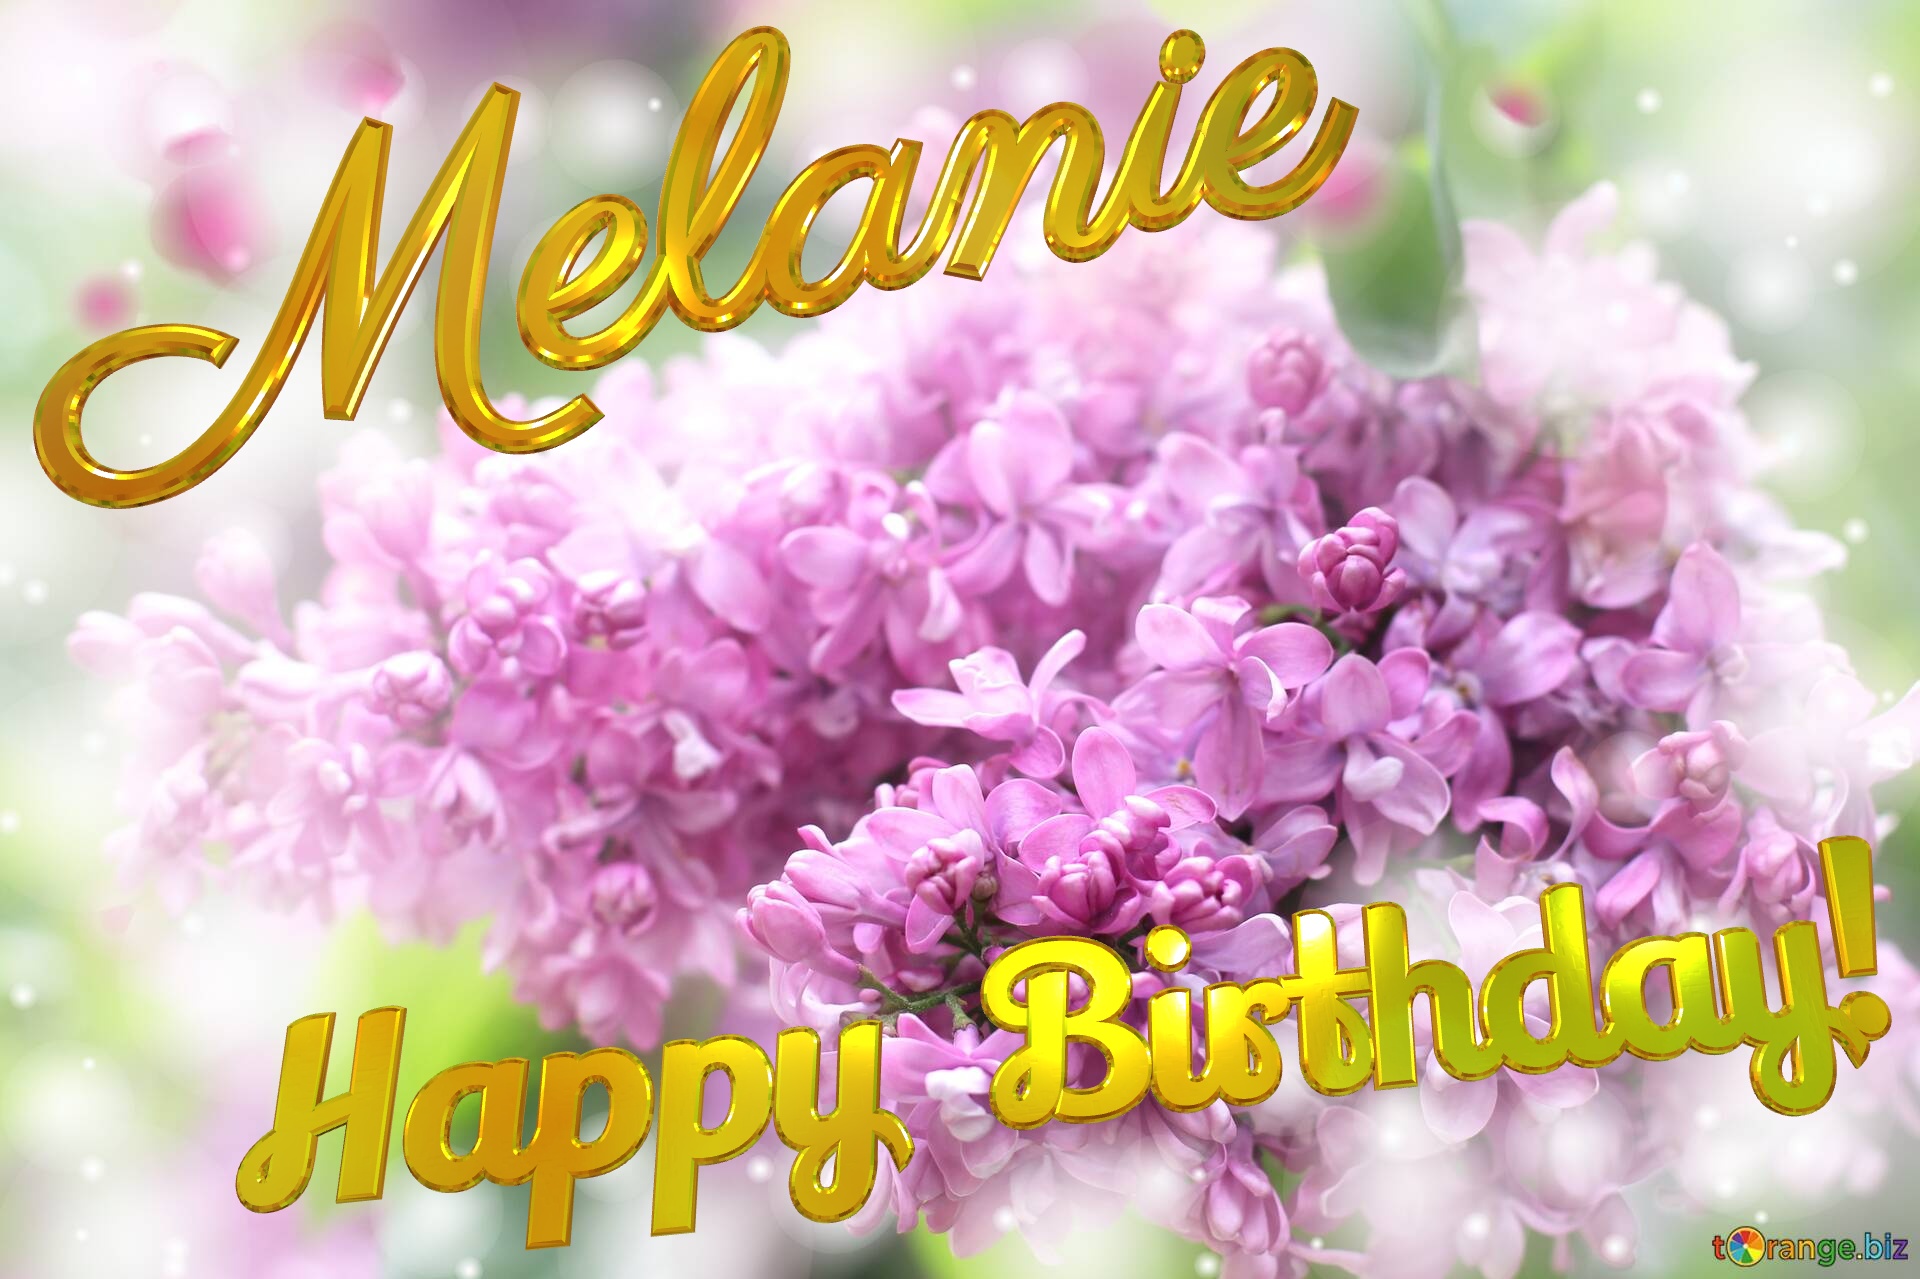 Melanie Happy Birthday! Lilac №0